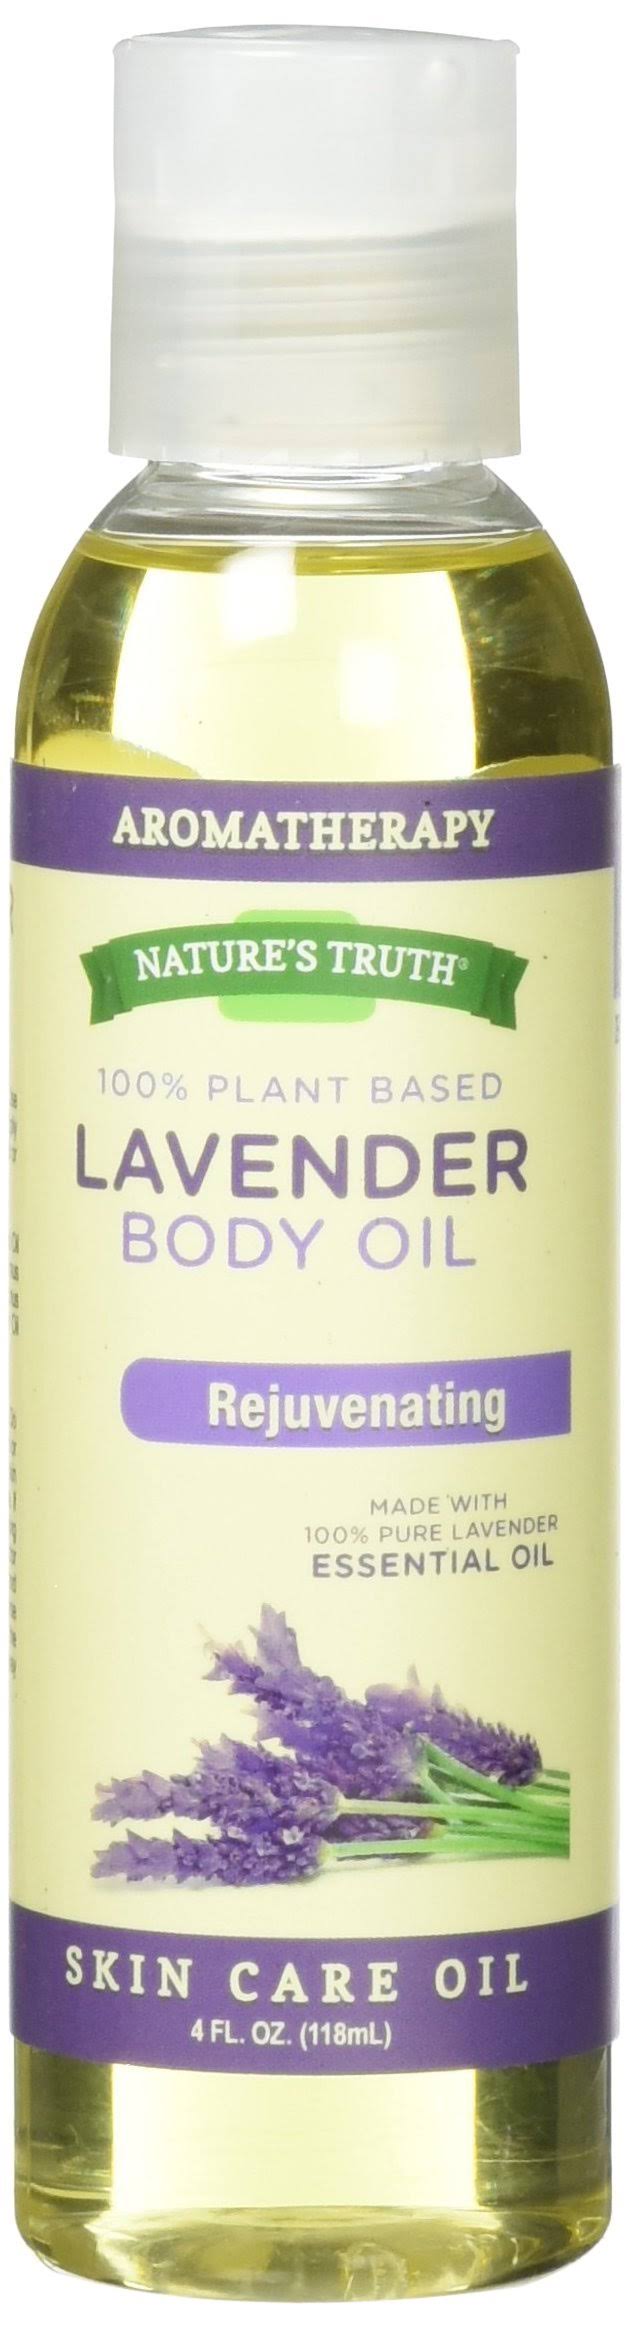 Natures Truth Skin Care Oil - Lavender, 4oz